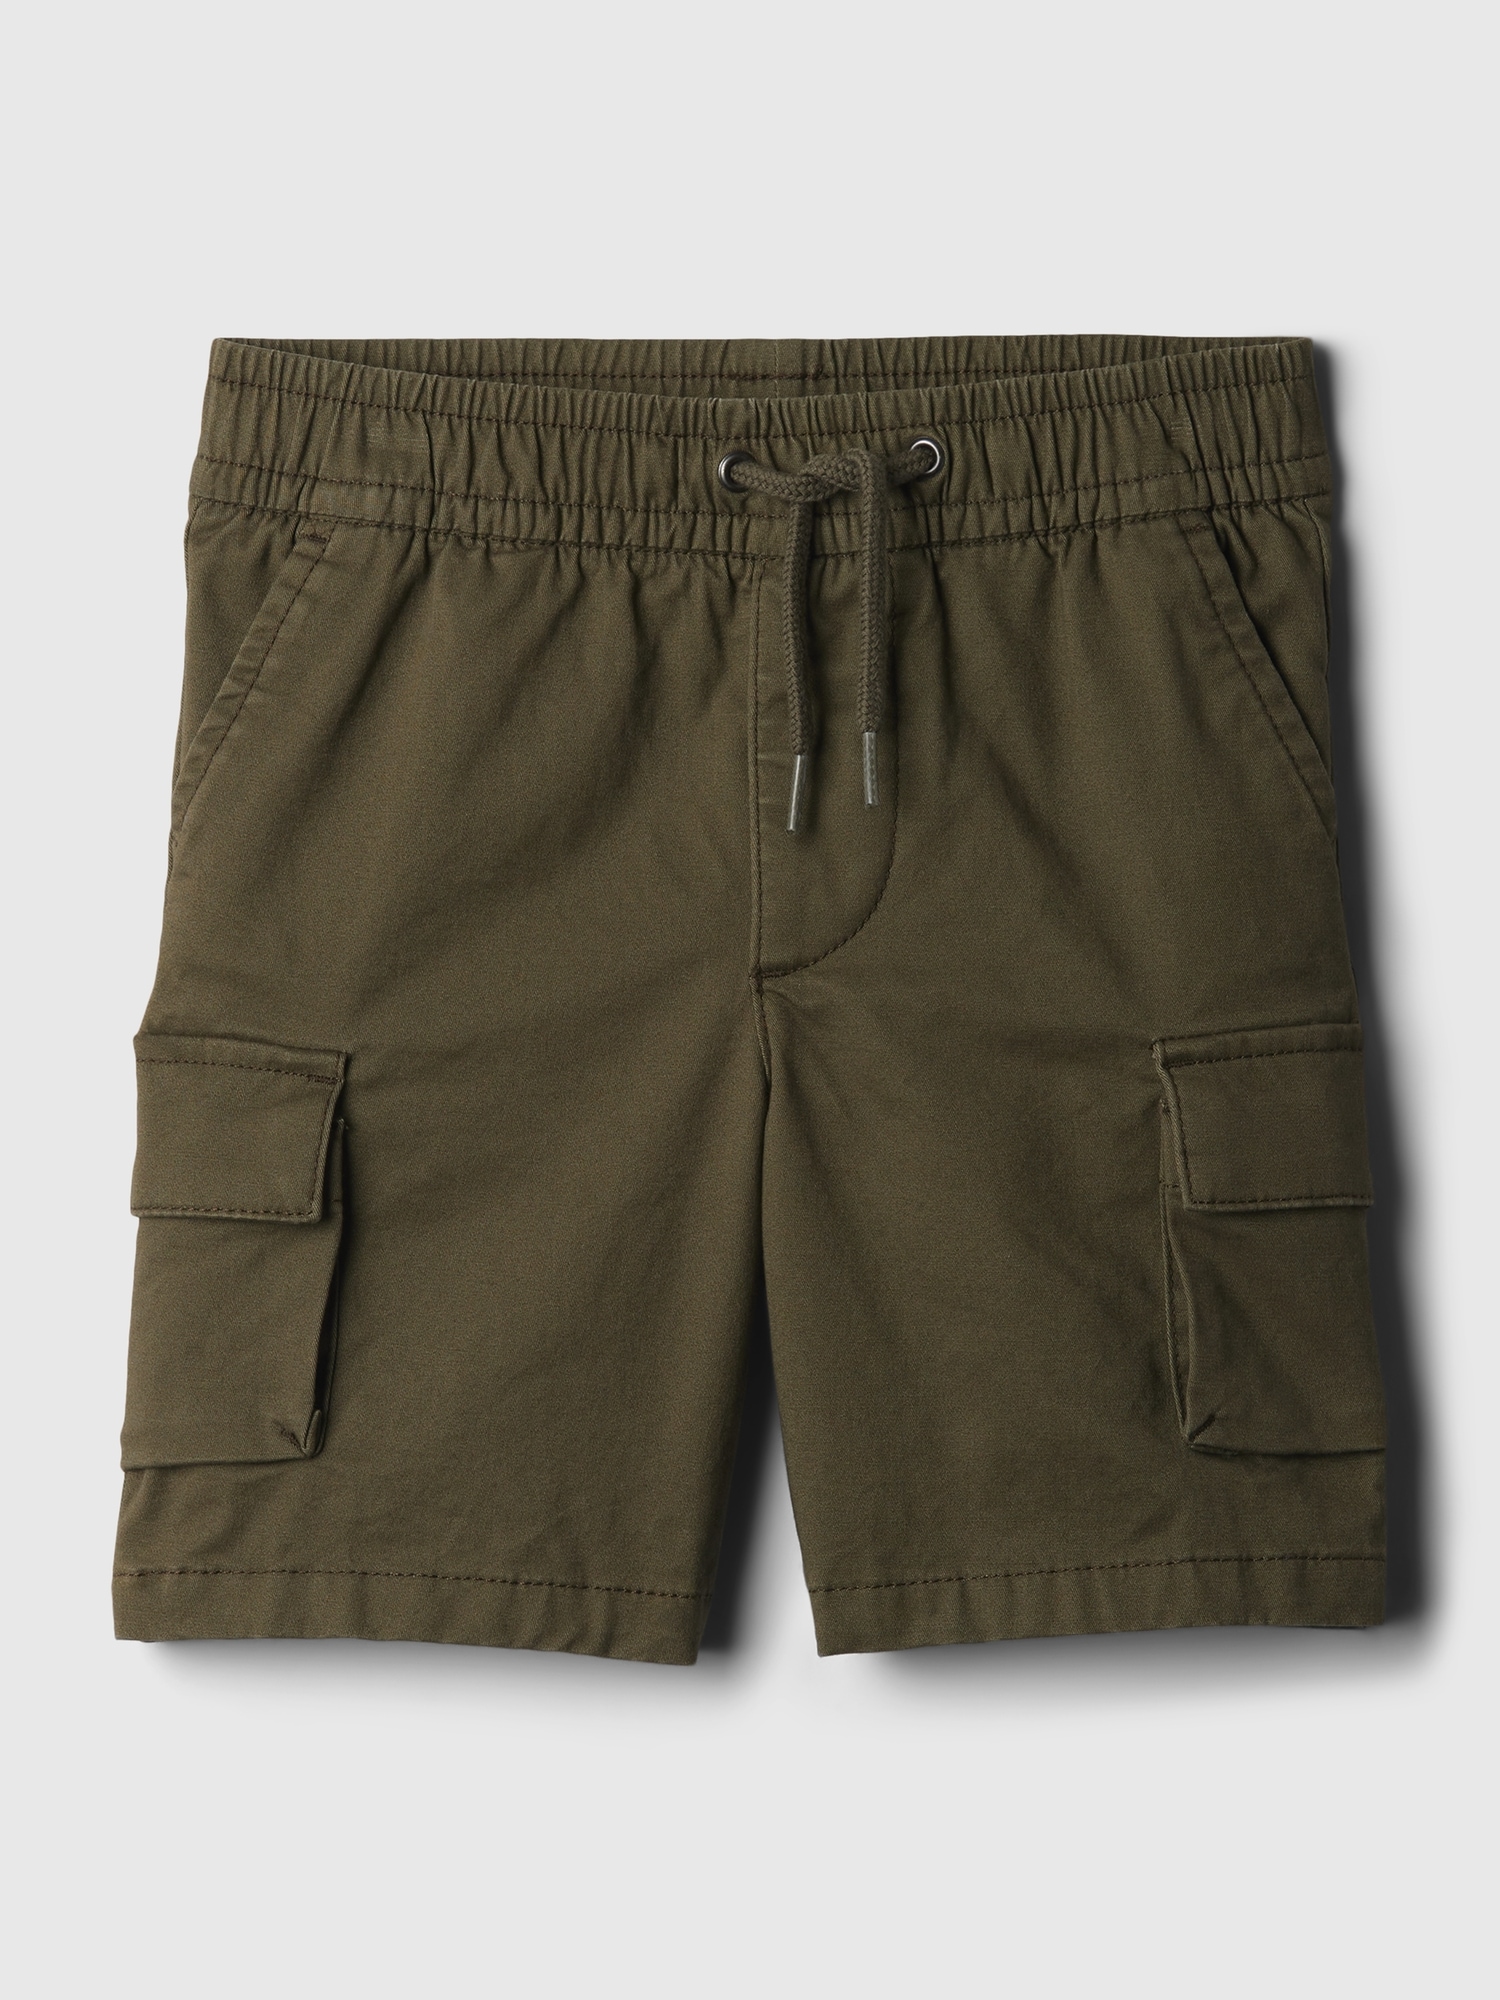 GAP Kids' Cargo Shorts - Boys